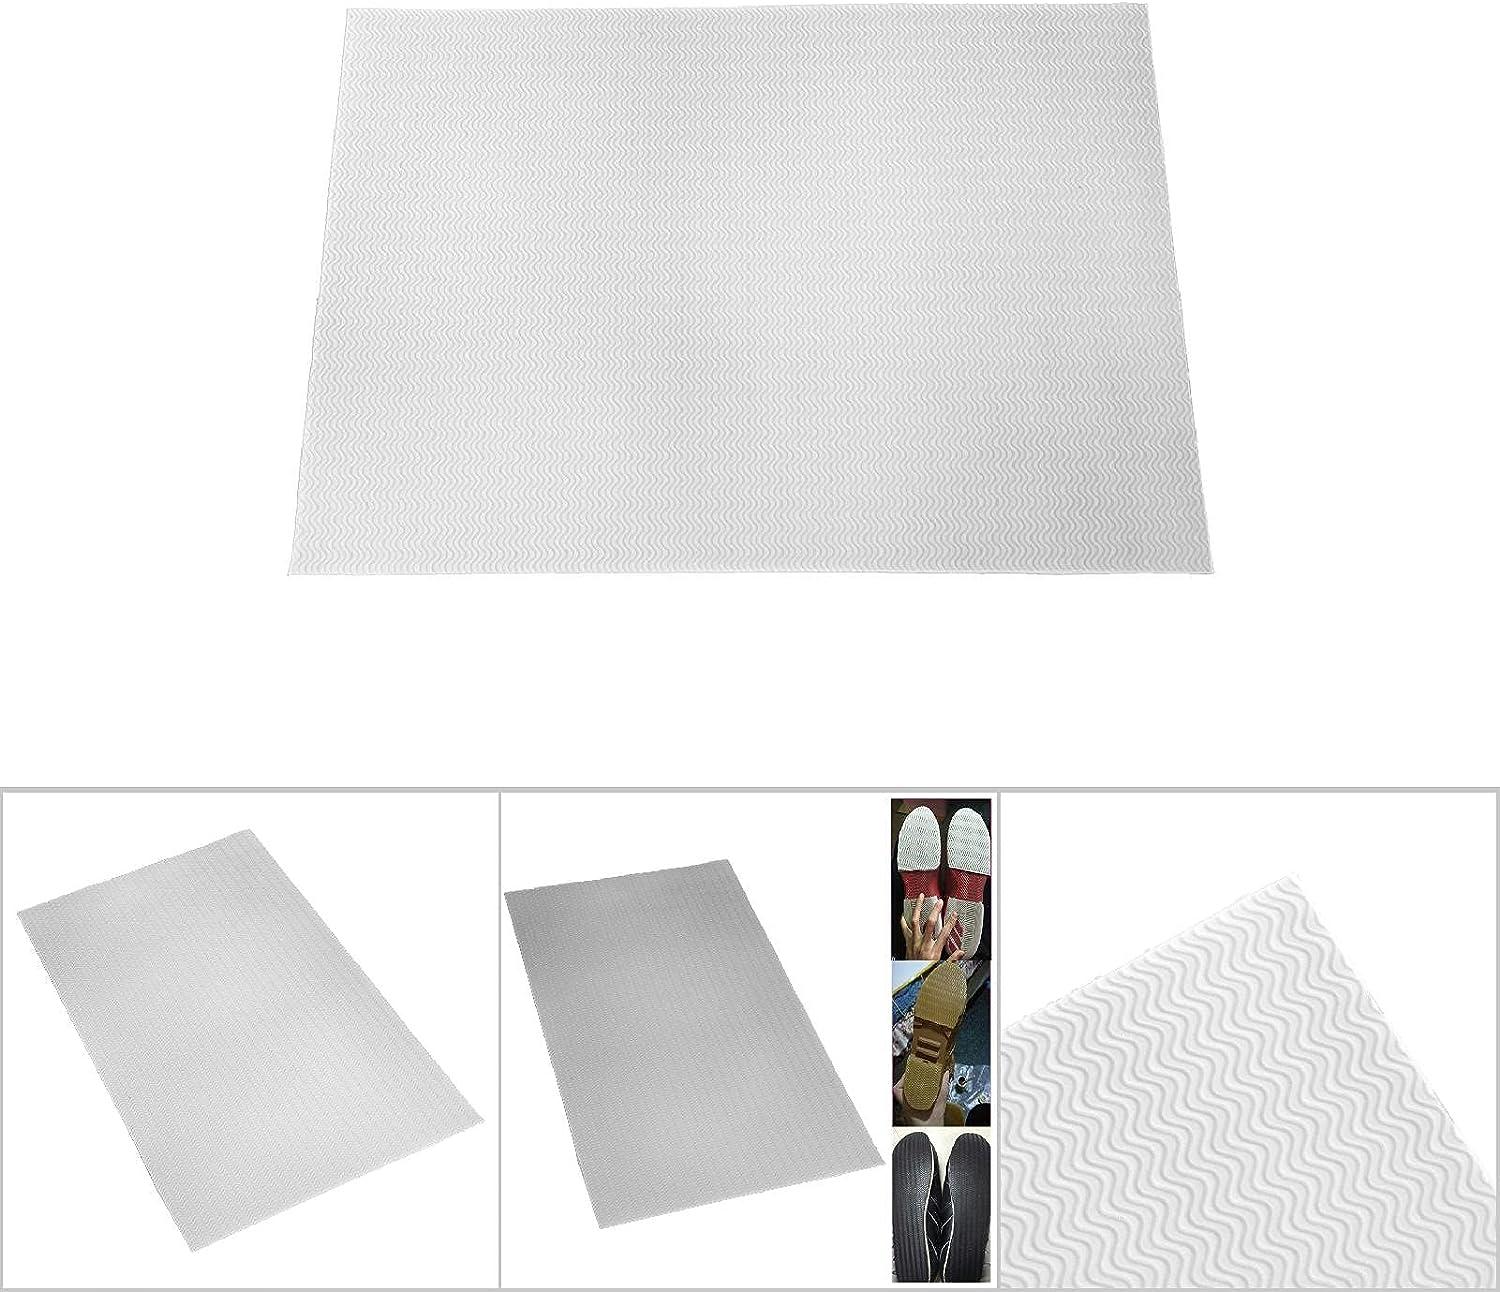 2Pcs Adhesive Silicone Sheet White Adhesive Nonslip Silicone Rubber Pad